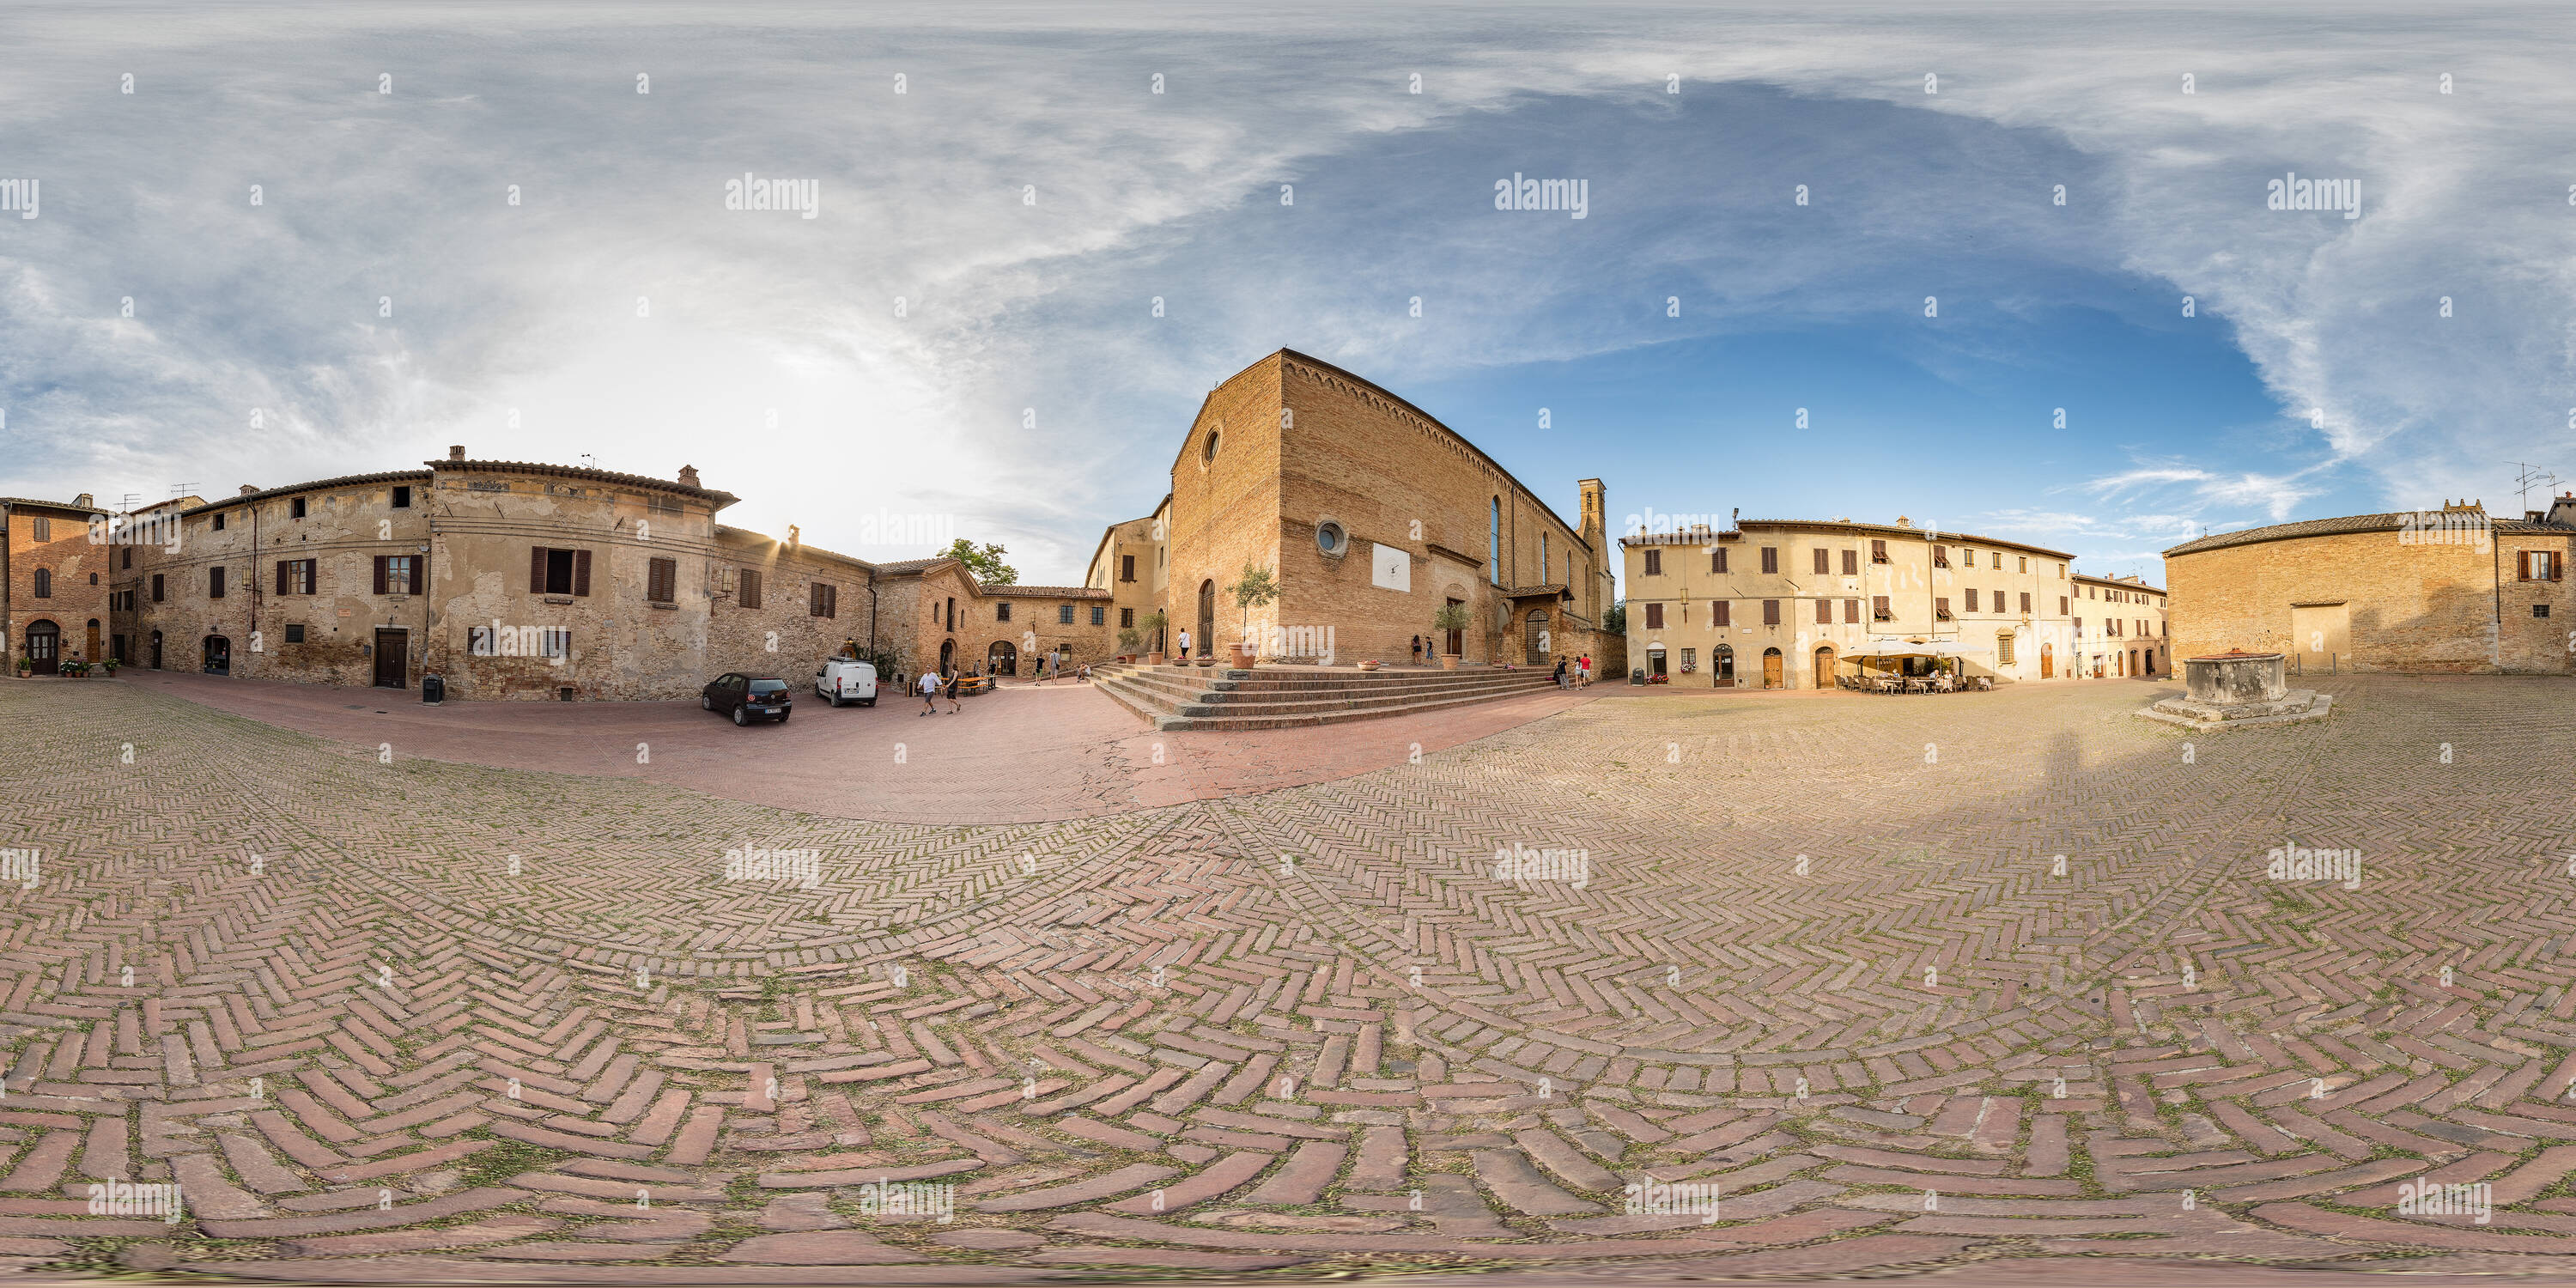 Vue panoramique à 360° de Piazza S. Agostino. L'Italie.